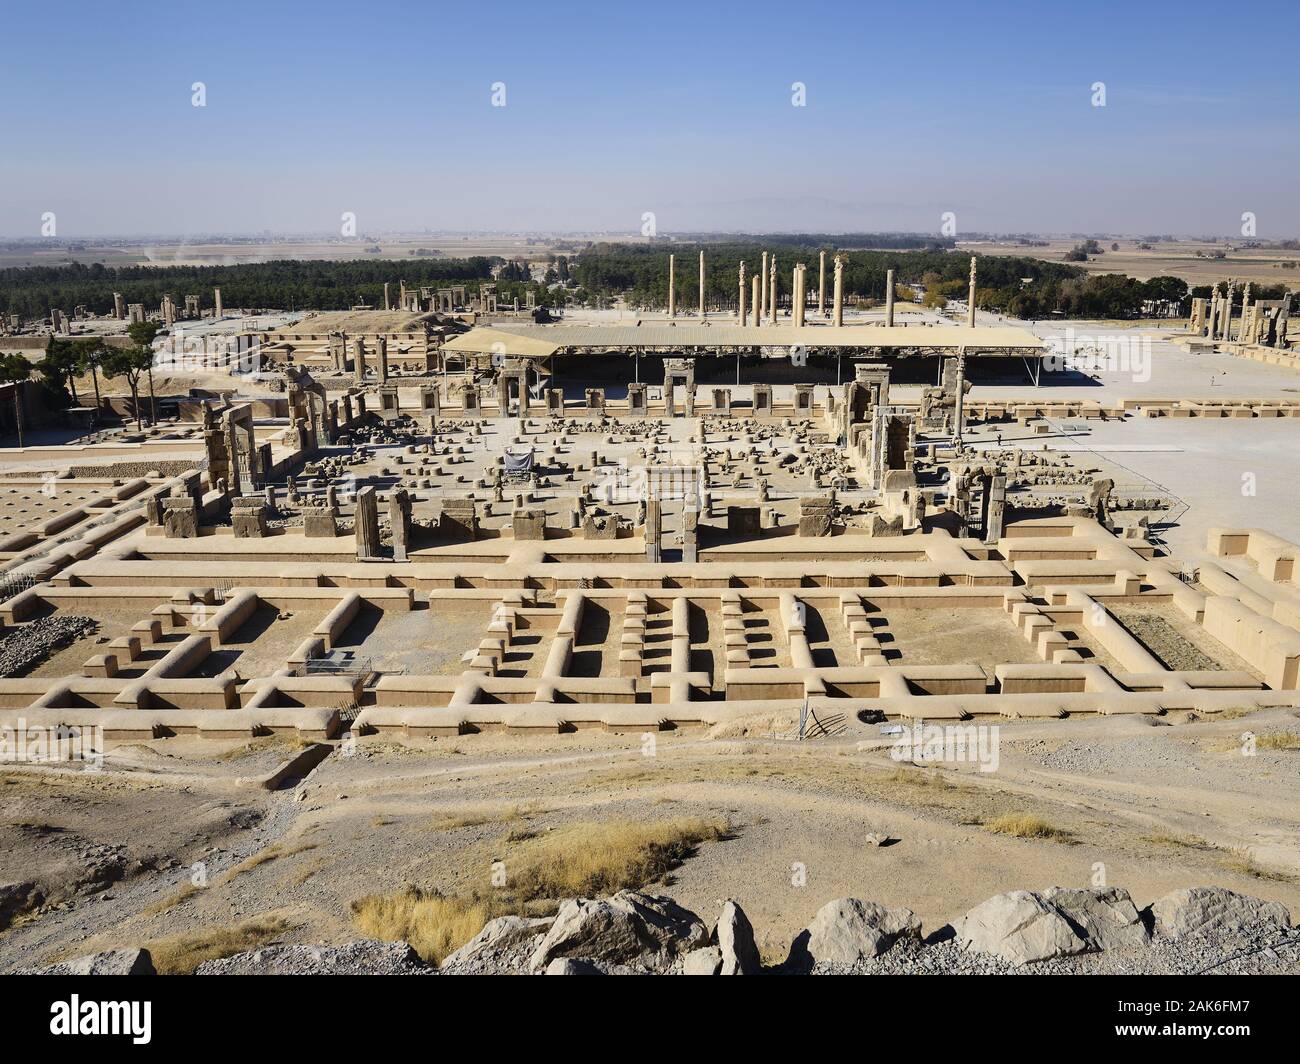 Provinz far/Persepolis: antike Ruinenstadt der Perserkoenige am Fuss des Berges Kuh-i-Rahmat, Iran | Utilizzo di tutto il mondo Foto Stock